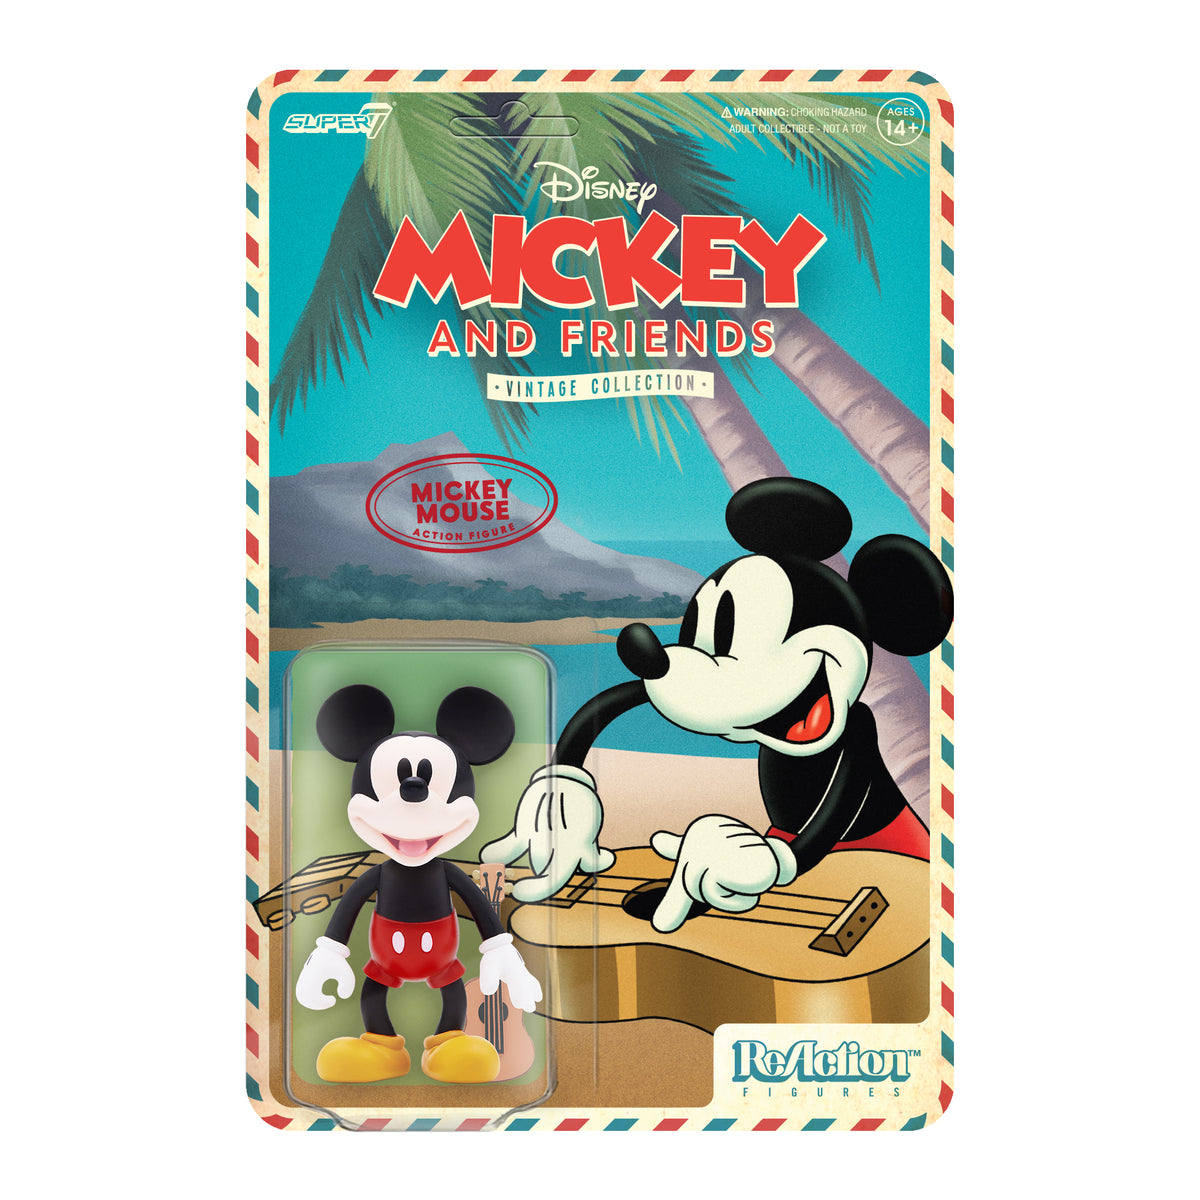 Celebrate Disney Mickey Mouse's 86th Birthday